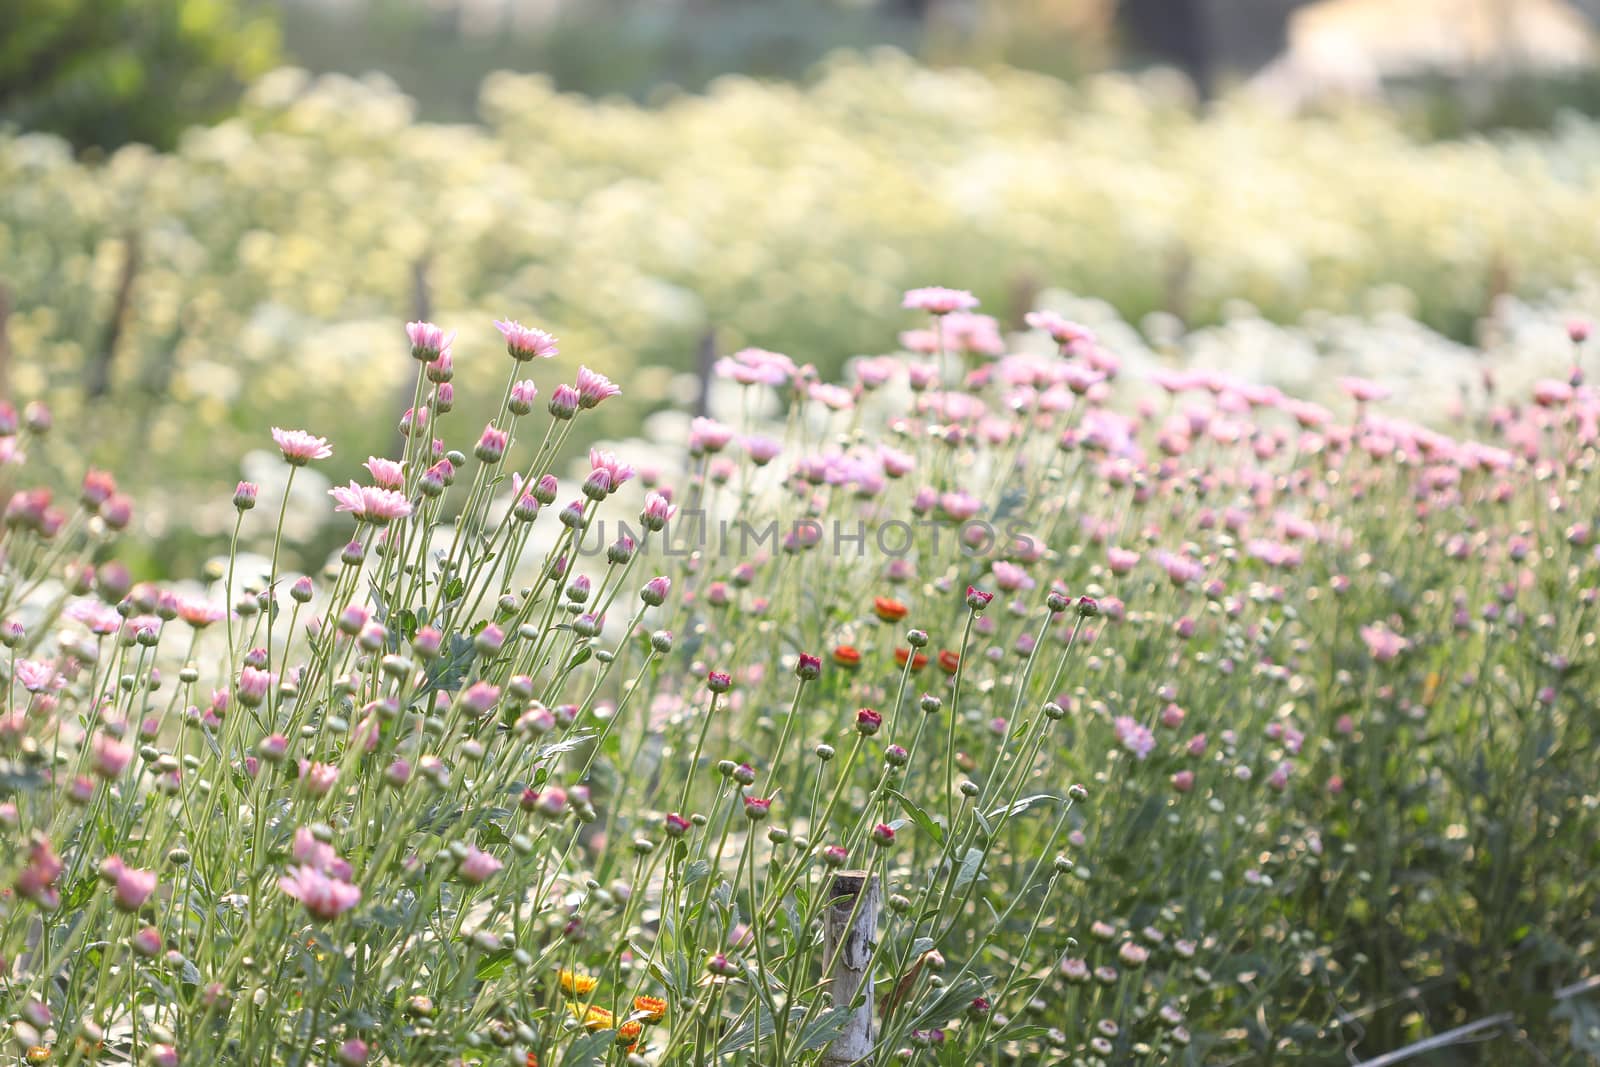 Pink Chrysanthemum buds under morning sunlight at flower field by paladin12